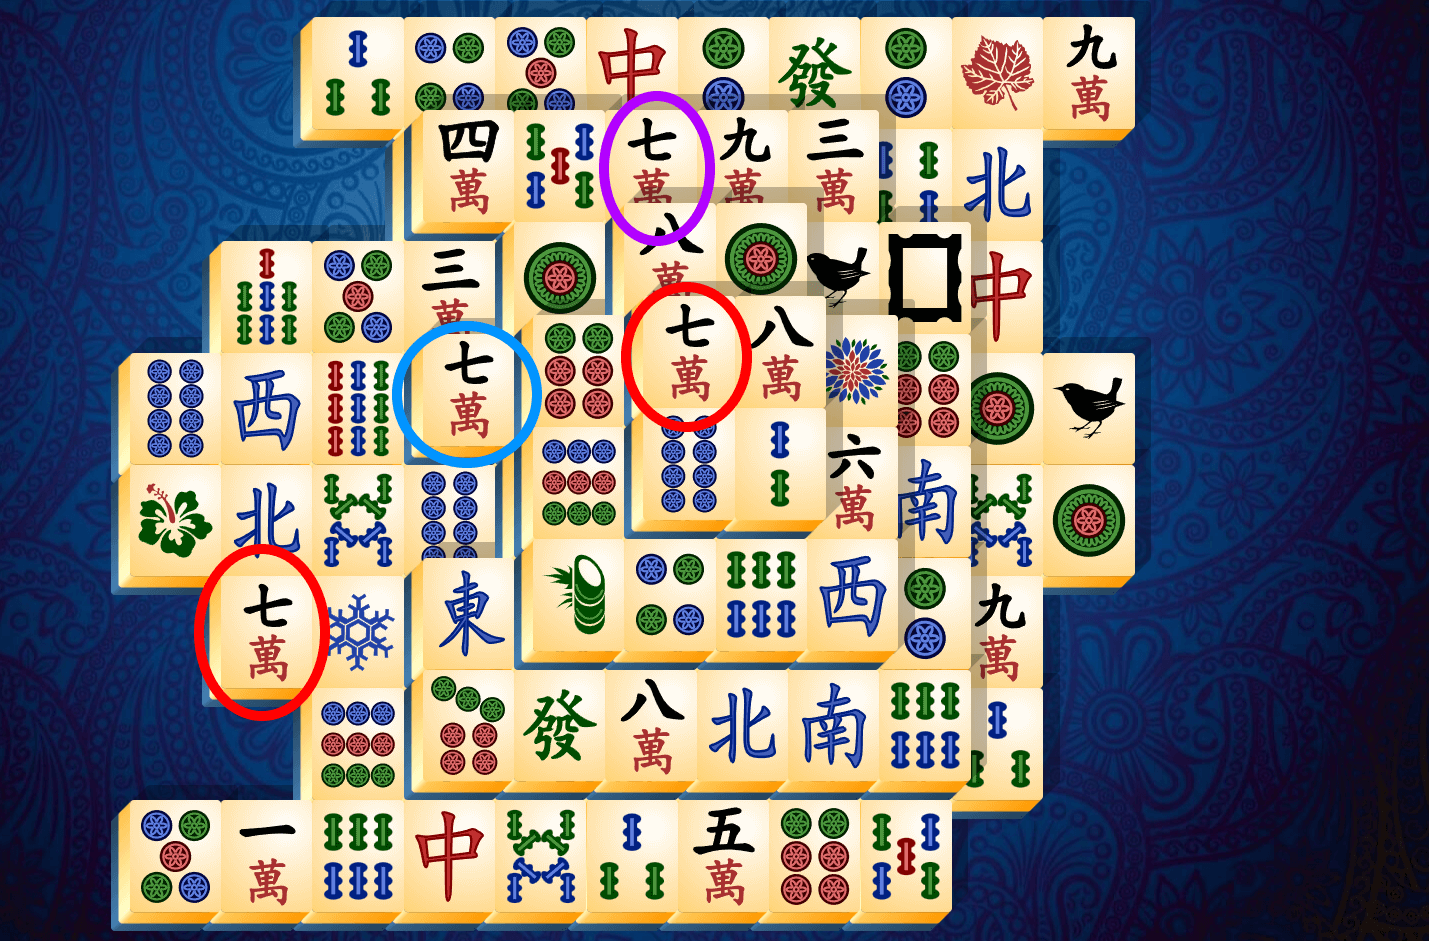 Samouczek Mahjonga jednoosobowego, krok 9